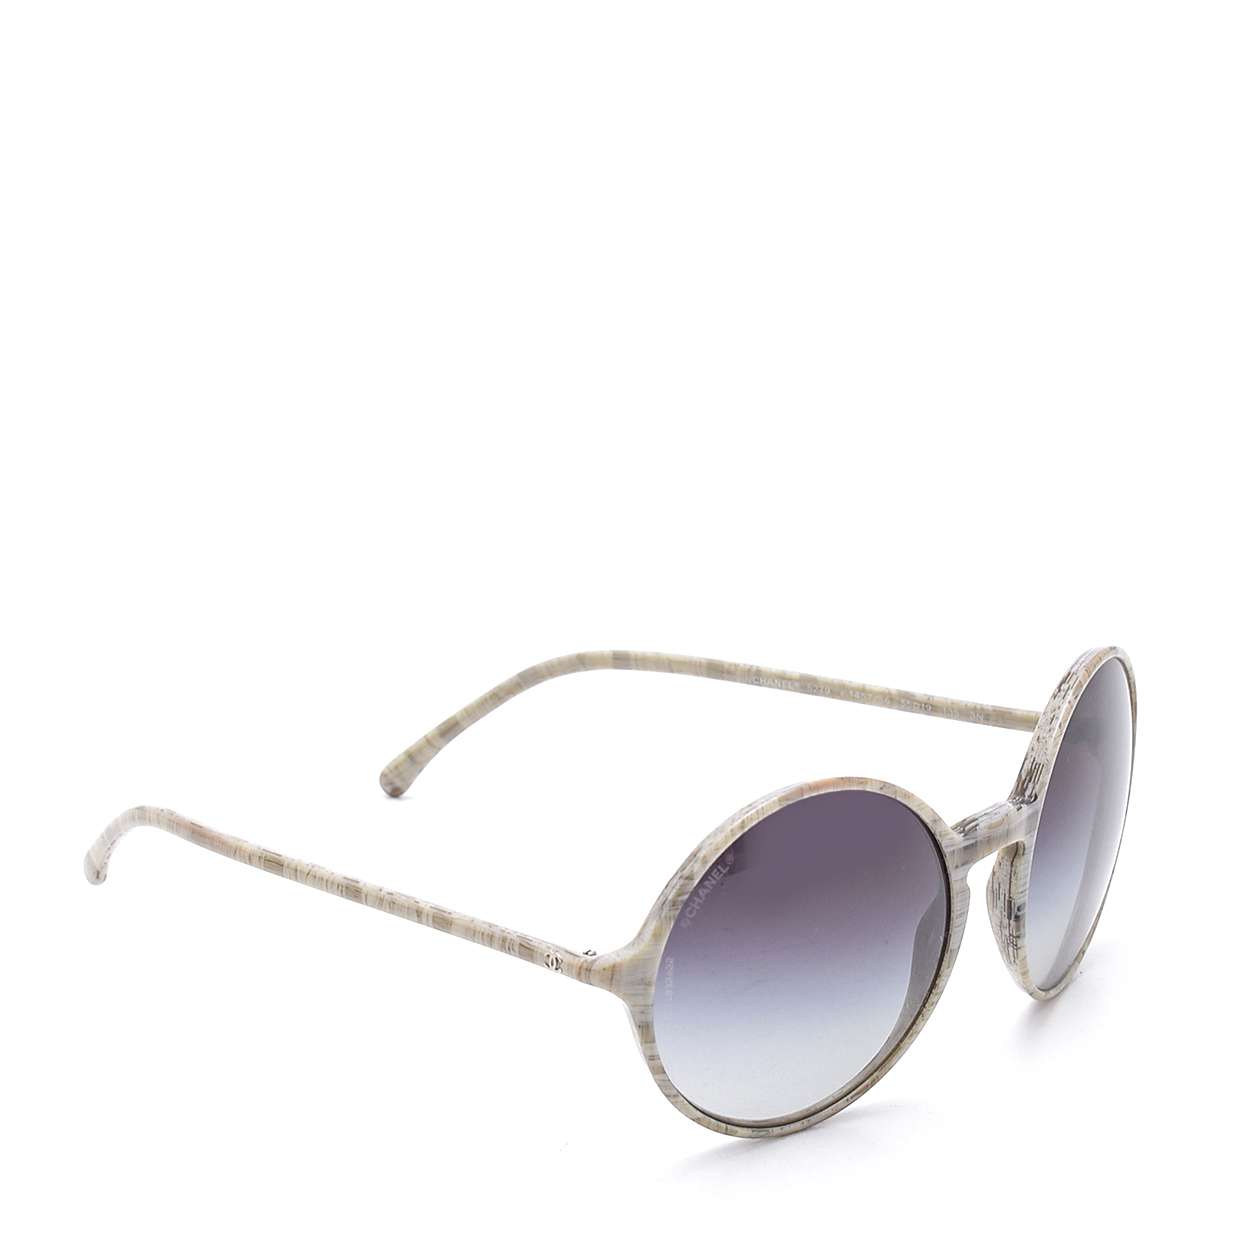 Chanel - Grey Retro Round Signature Light Sunglasses